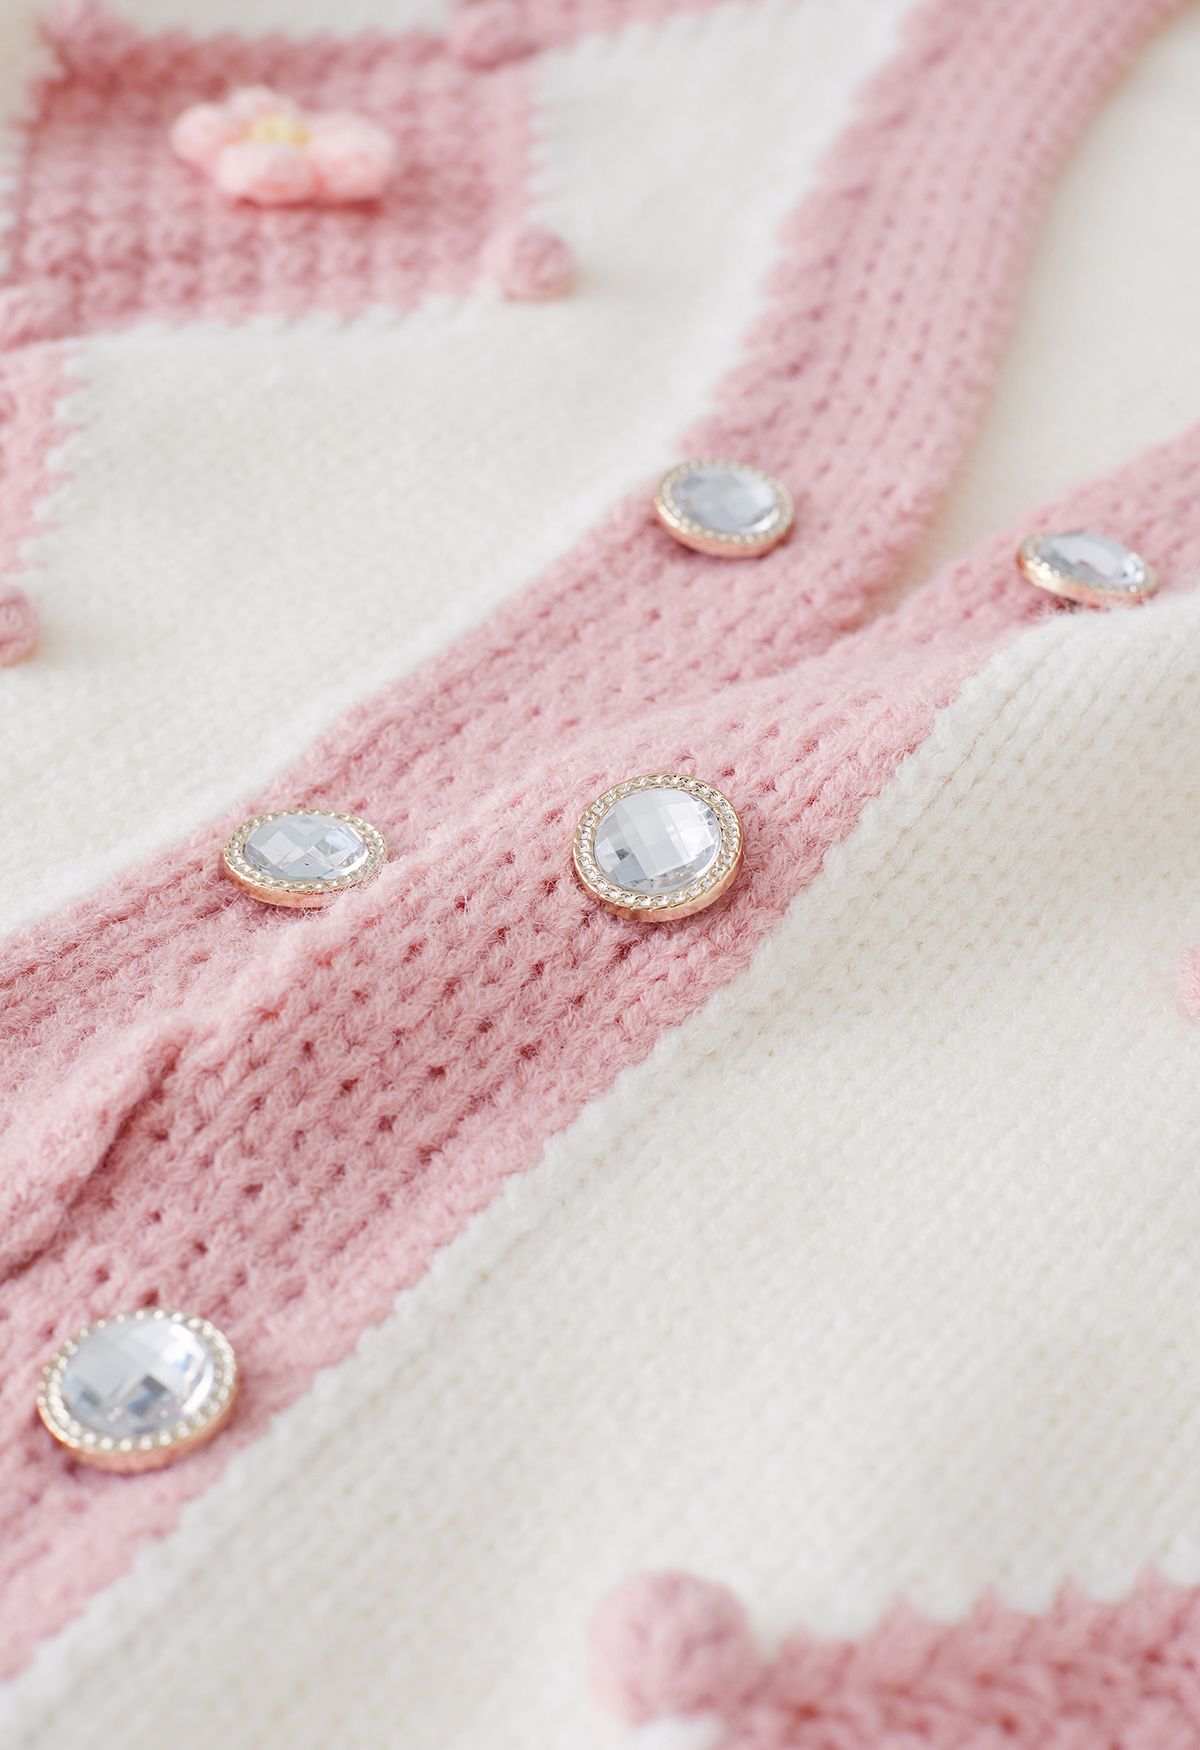 Pink Floral Stitched Pom-Pom Knit Cardigan